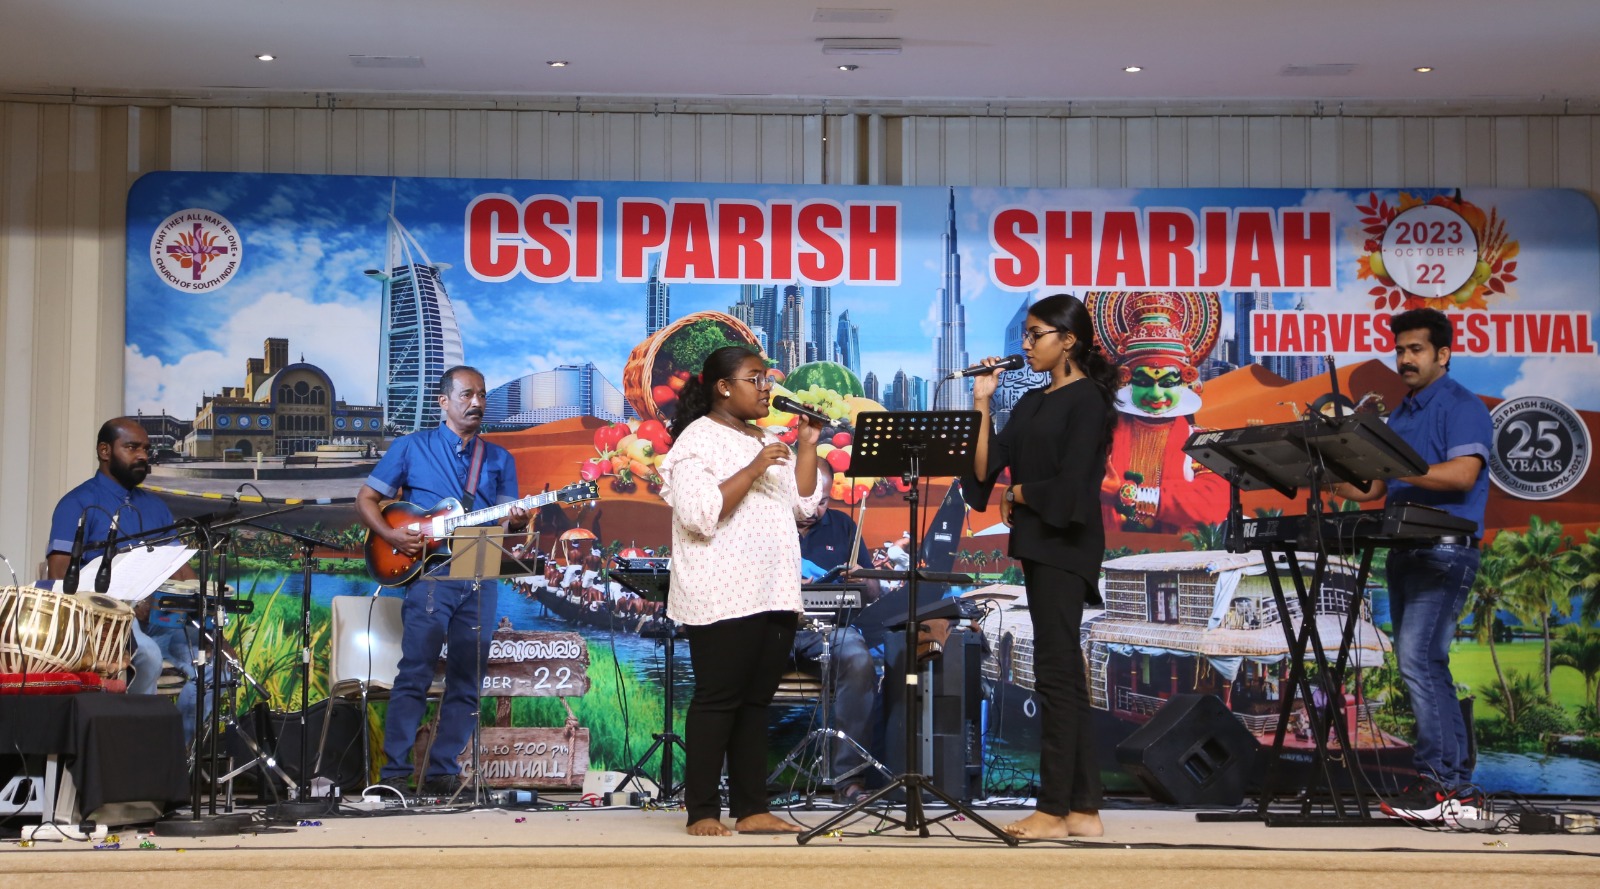 Cultural events_Harvest Festival 2023_CSI Parish Sharjah ( (7)